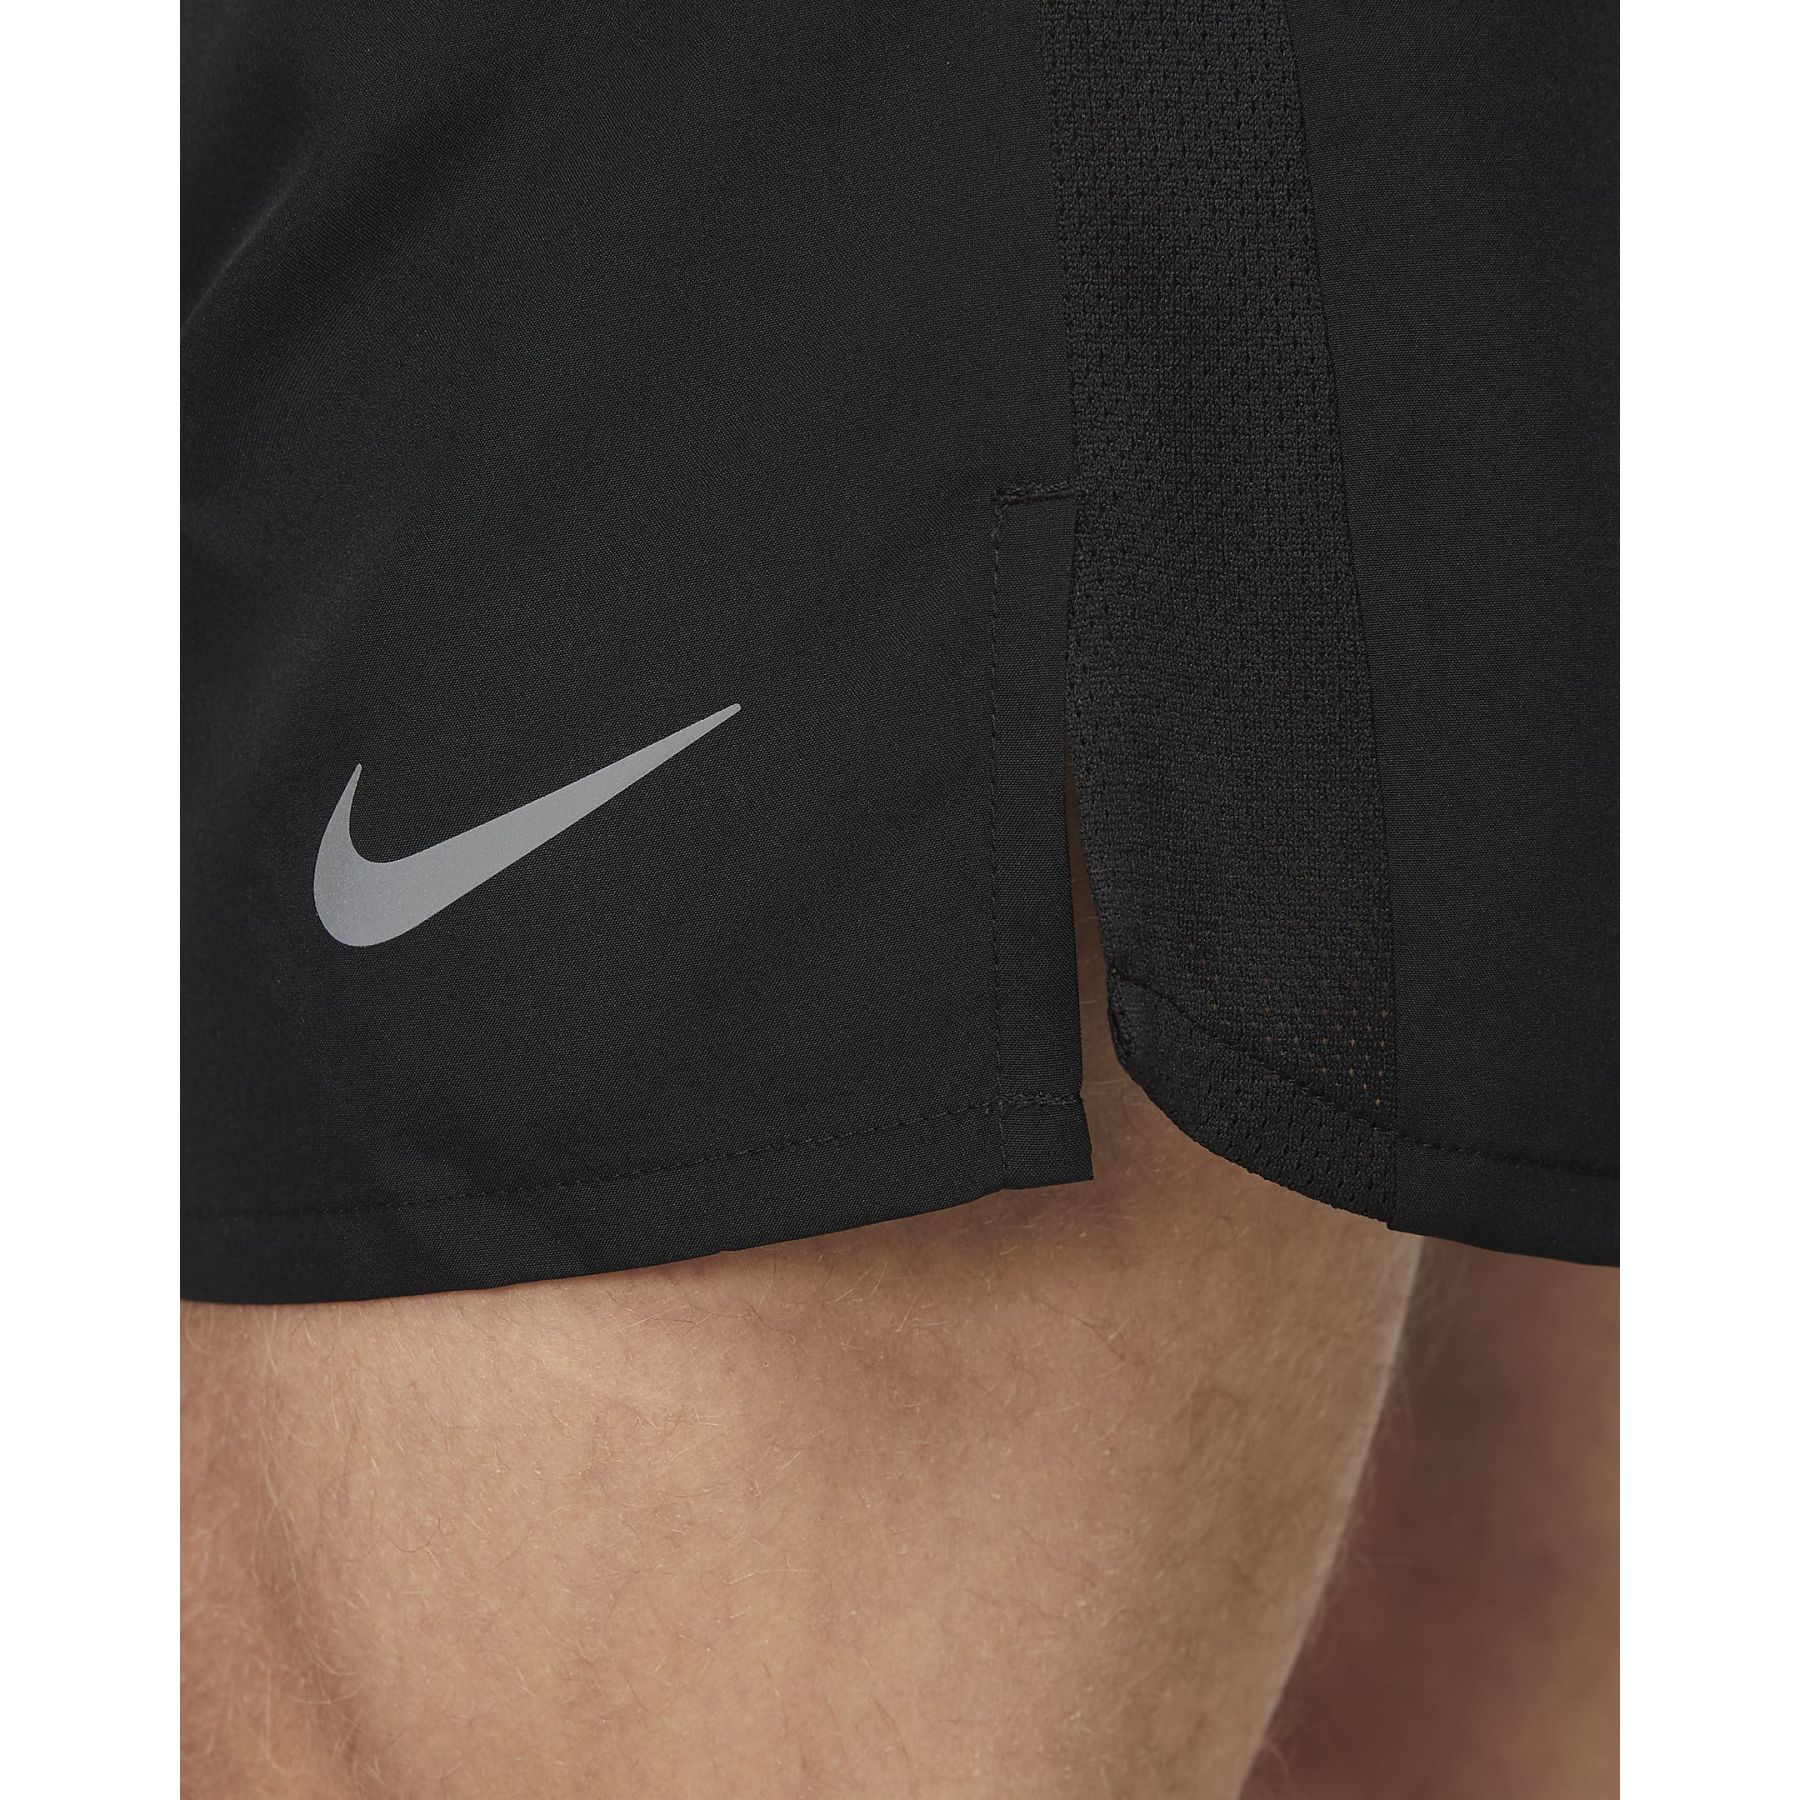 Nike Flex Stride 7 Inch Mens Running Shorts (Black-Reflective Silver)